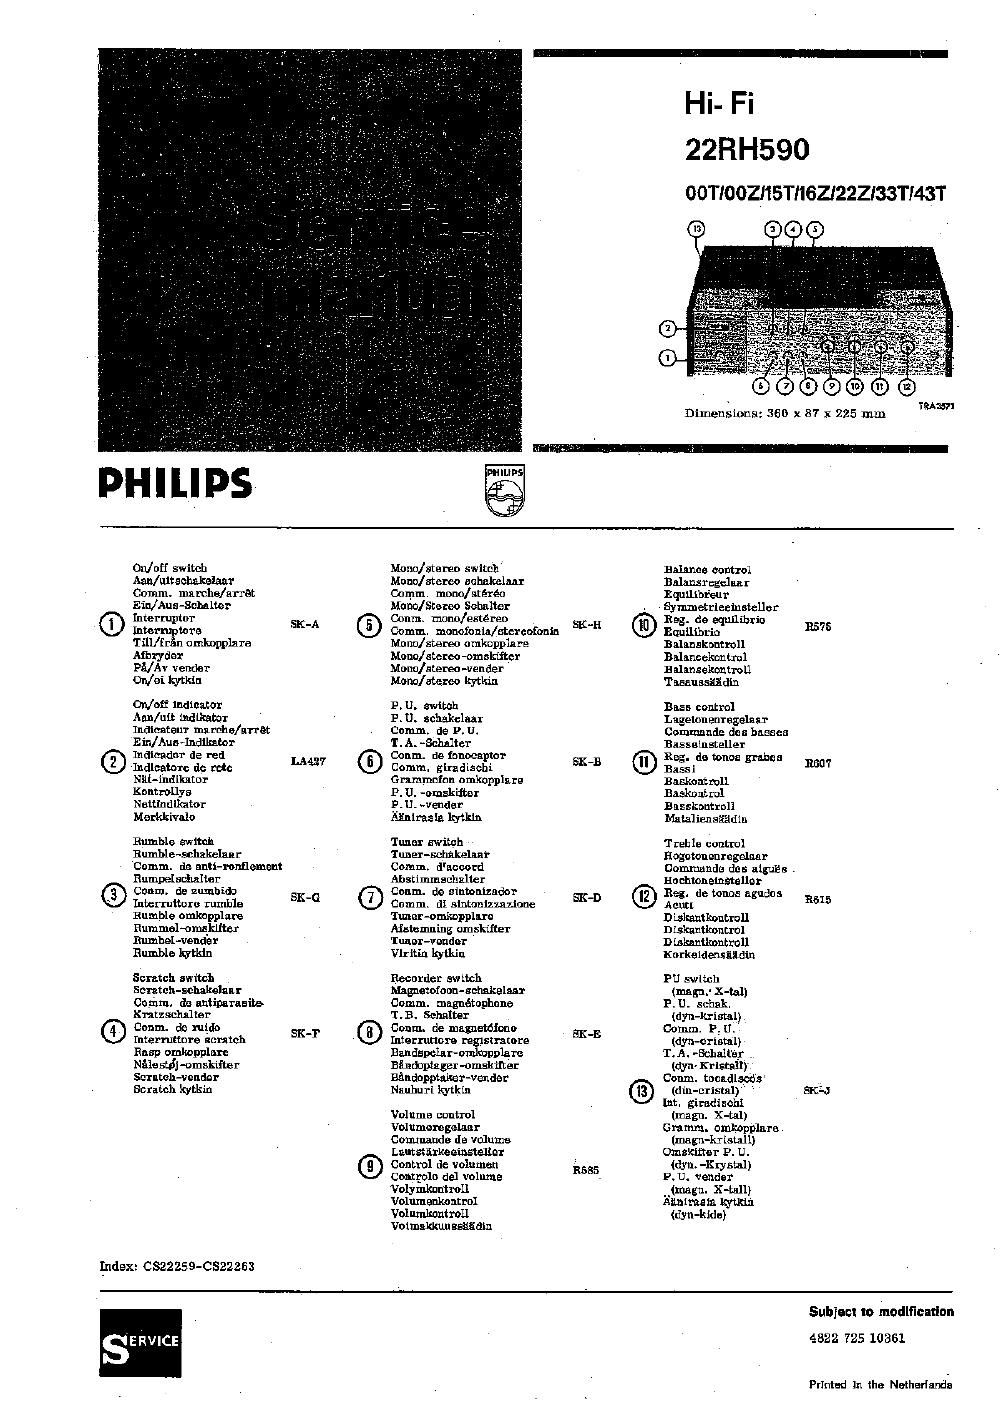 philips 22 rh 590 service manual